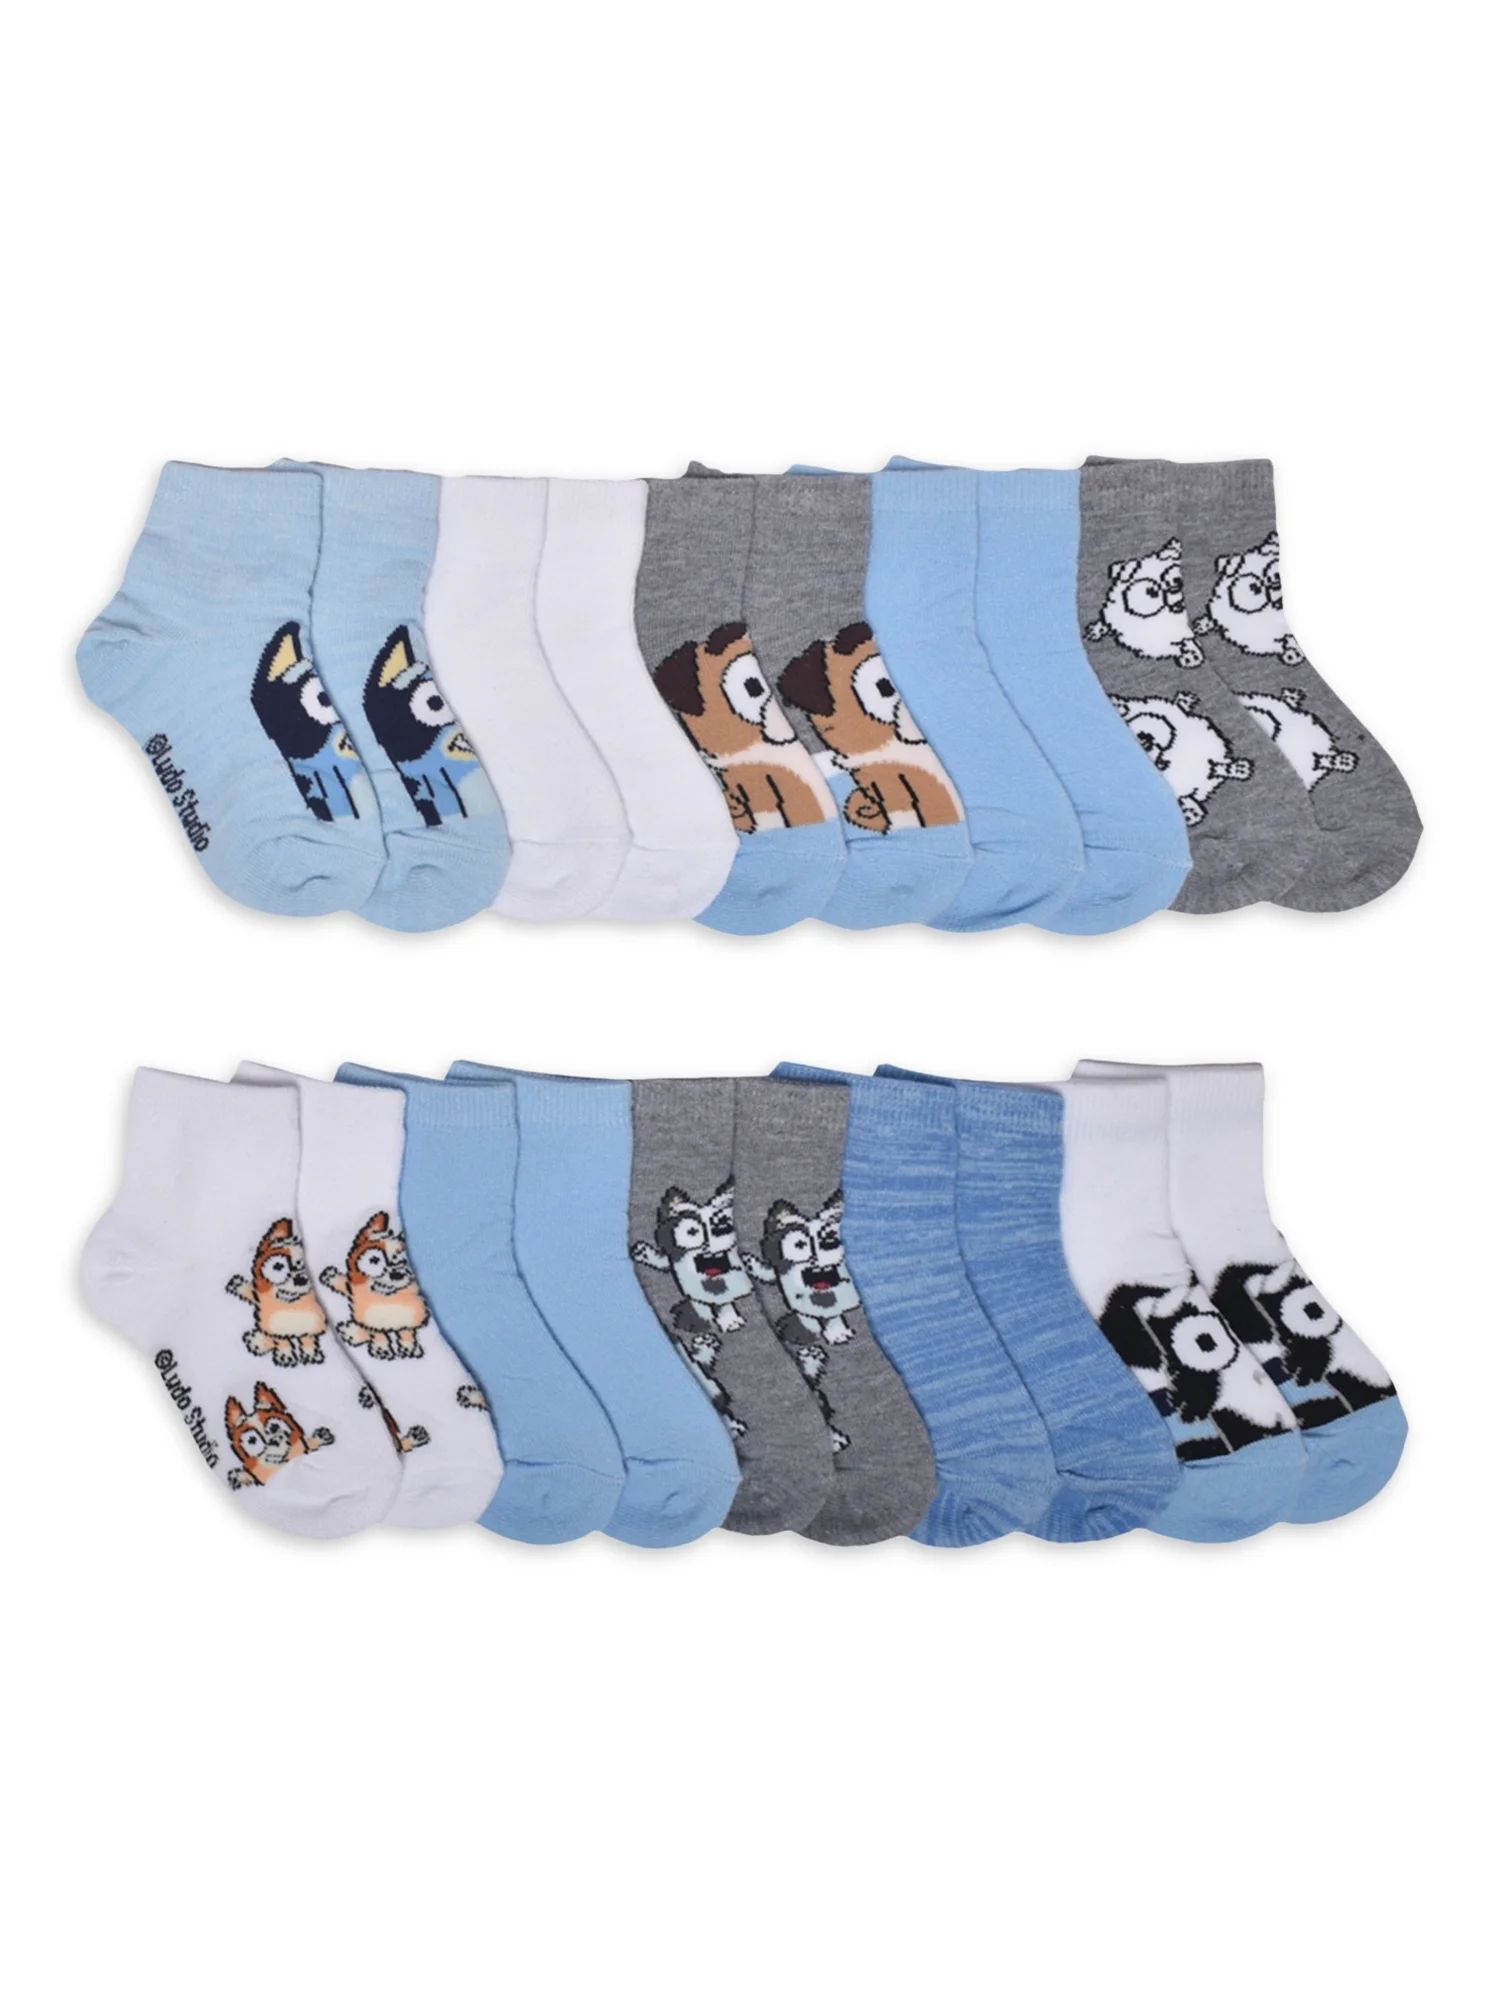 Bluey Toddler Ankle Socks, 10-Pack, Sizes 12M-5T | Walmart (US)